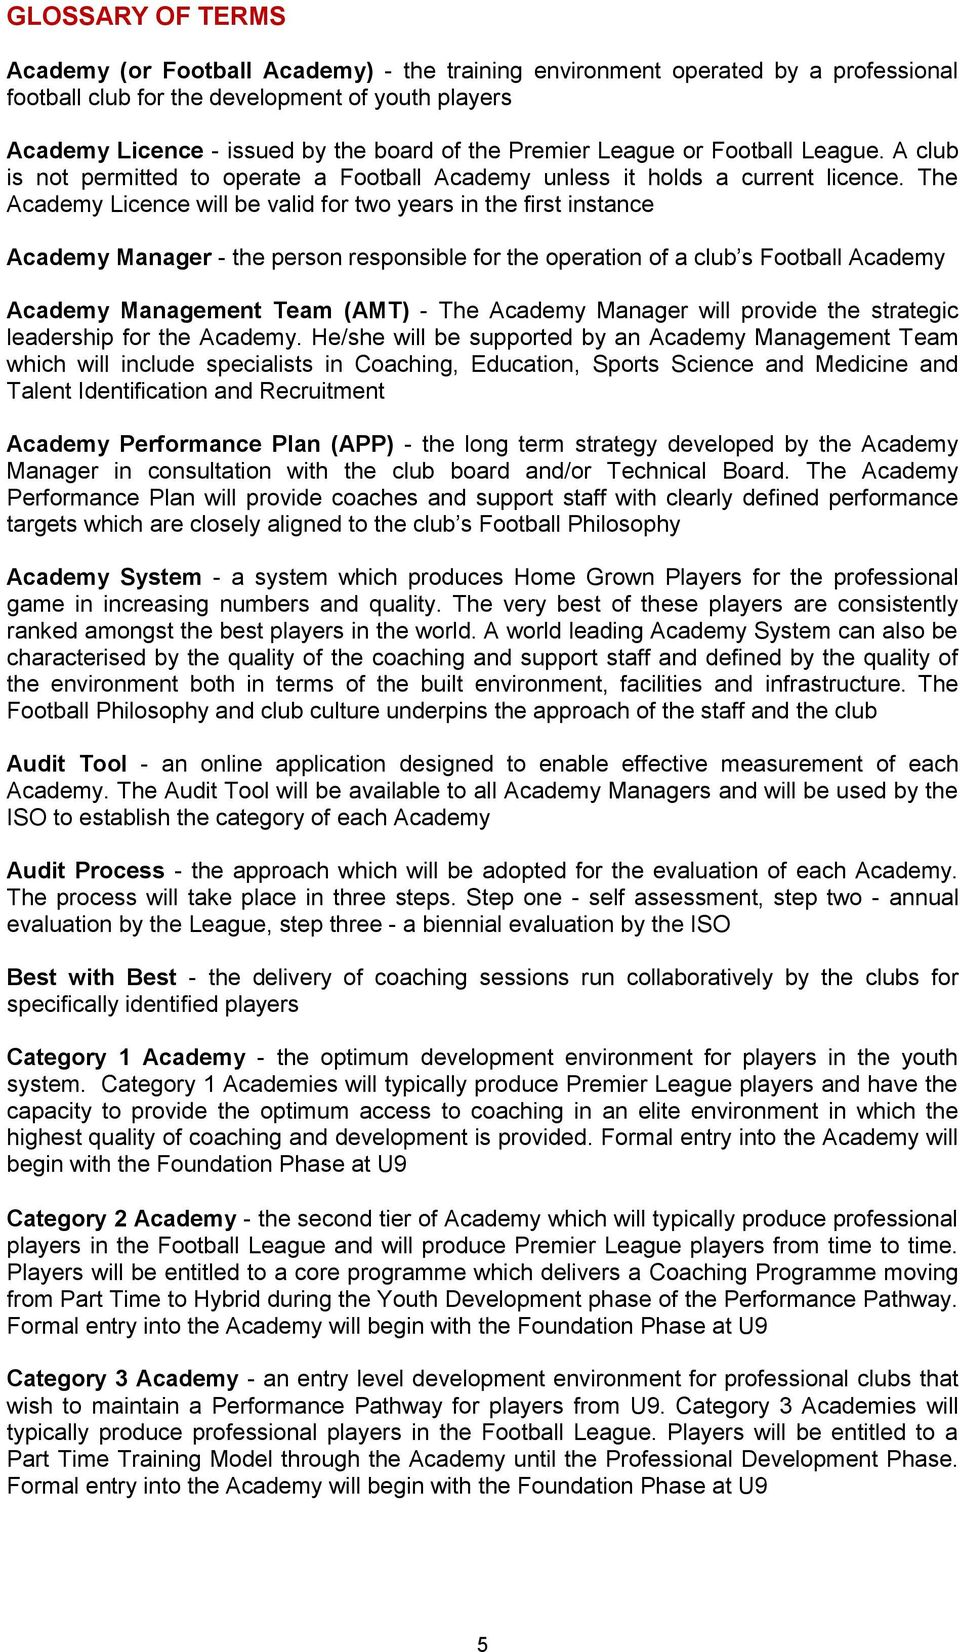 FL24 Players, PDF, National Association Football Premier Leagues